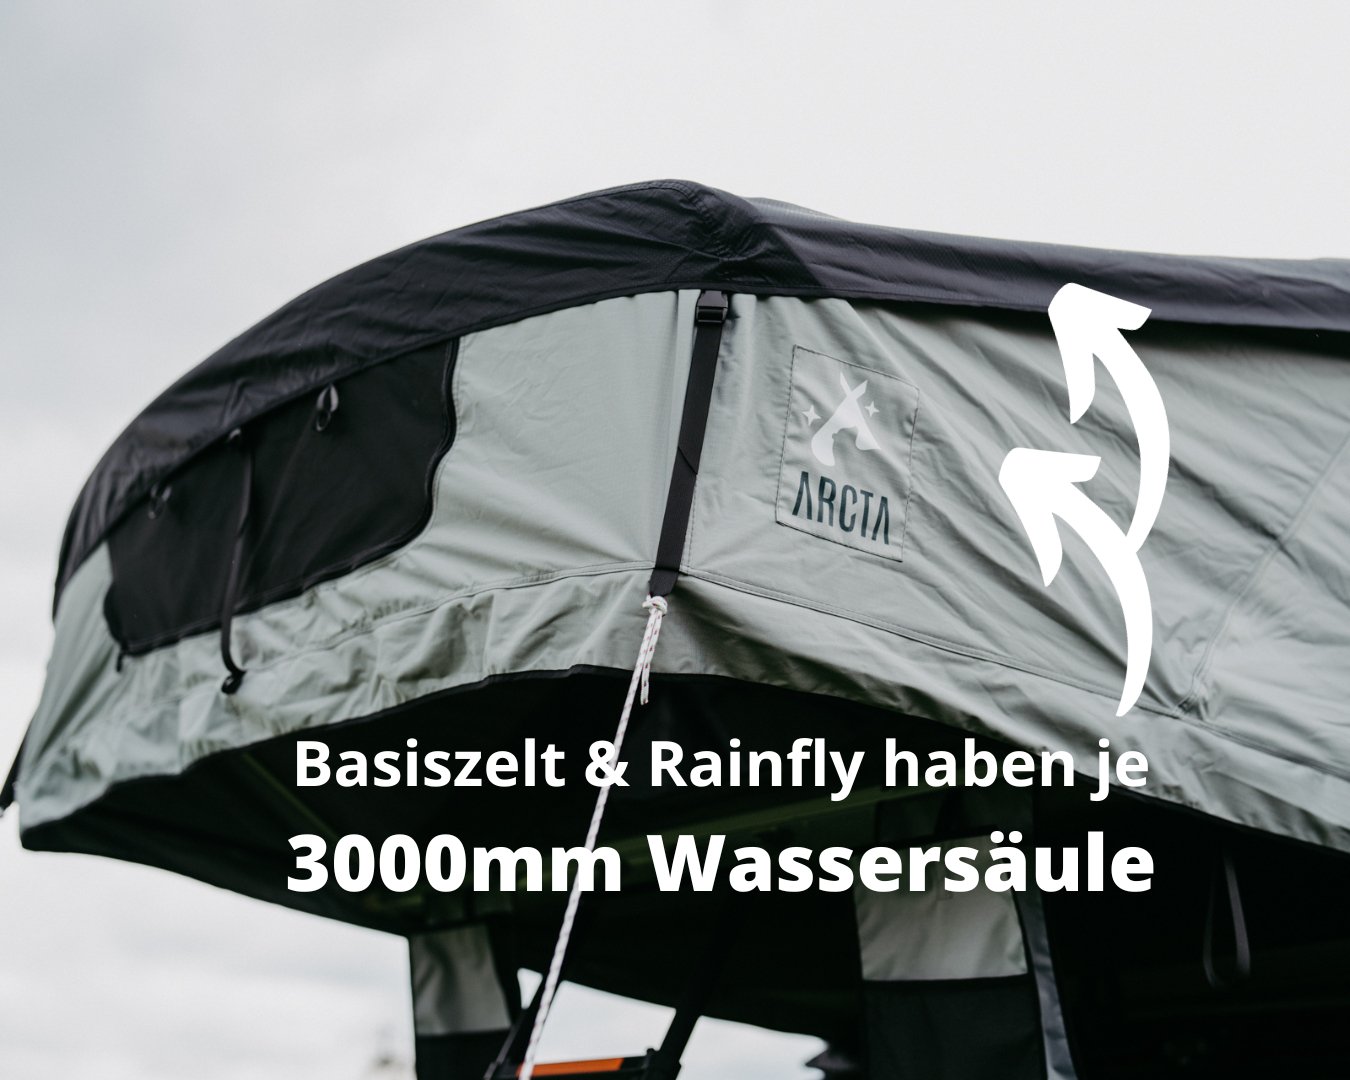 VIATOR 140 Dachzelt - Basiszelt & Rainfly haben je 3000mm Wassersäule ARCTA